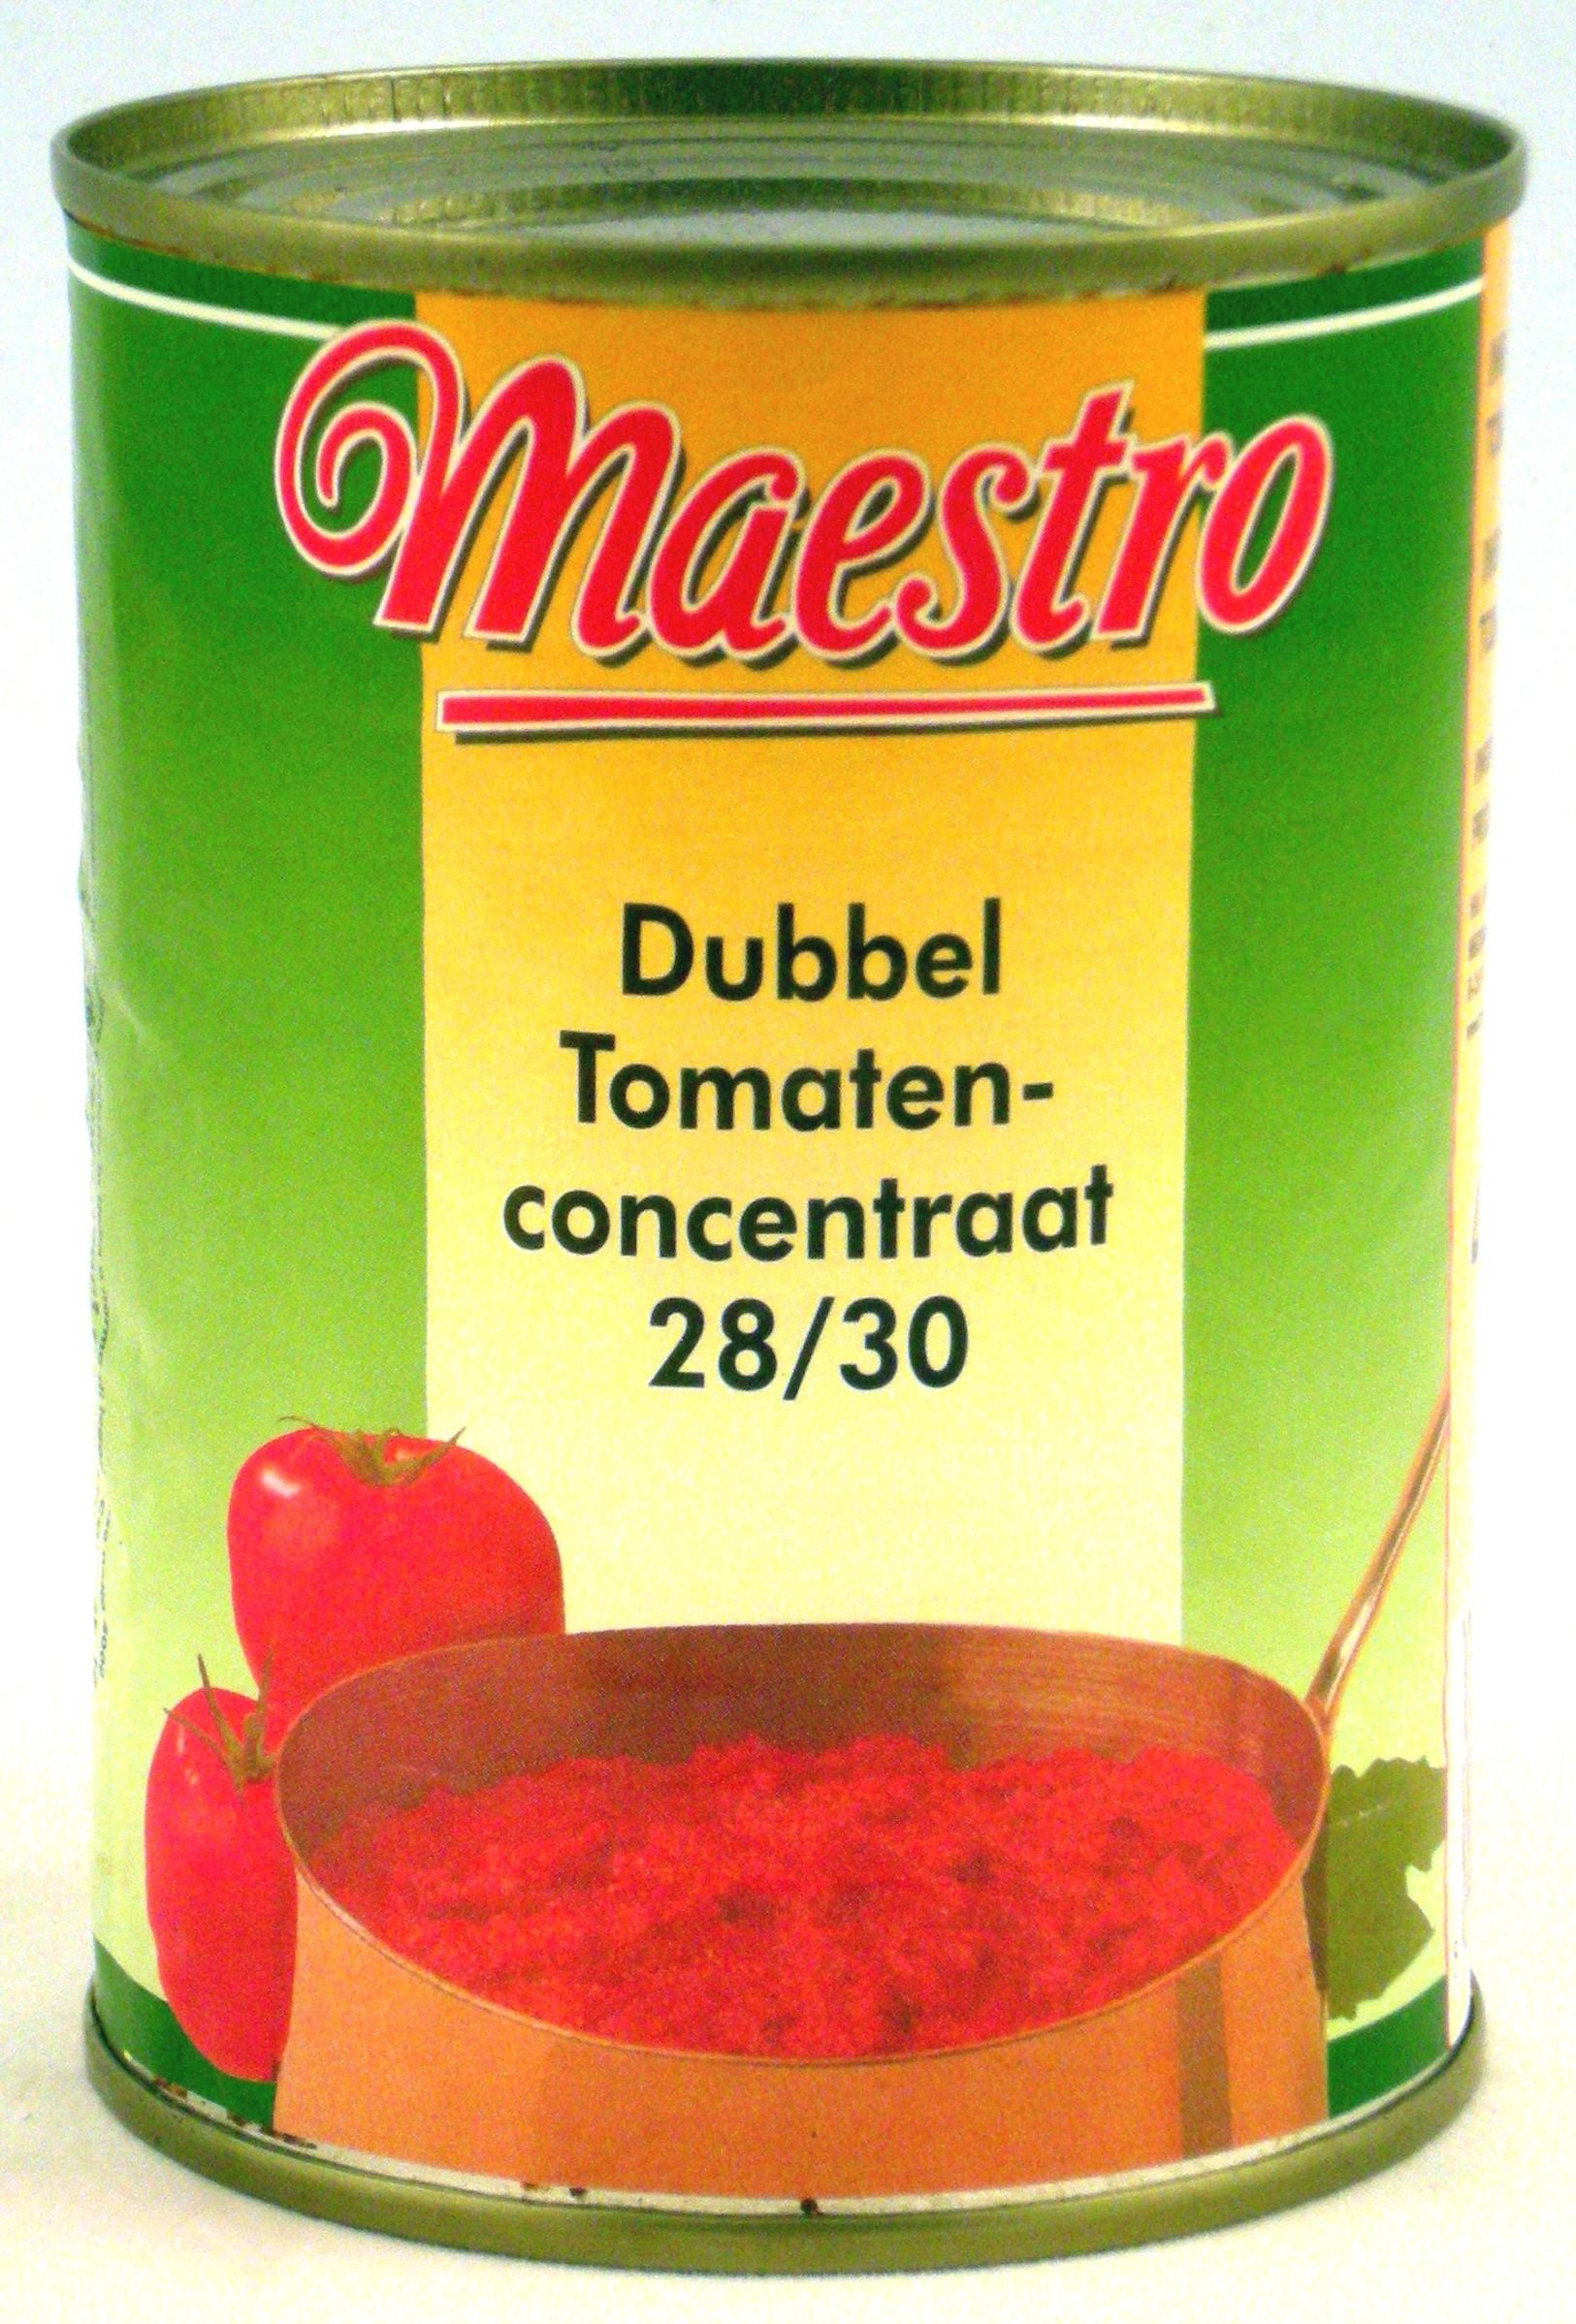 Maestro tomaten concentraat 0.5L 28/30%